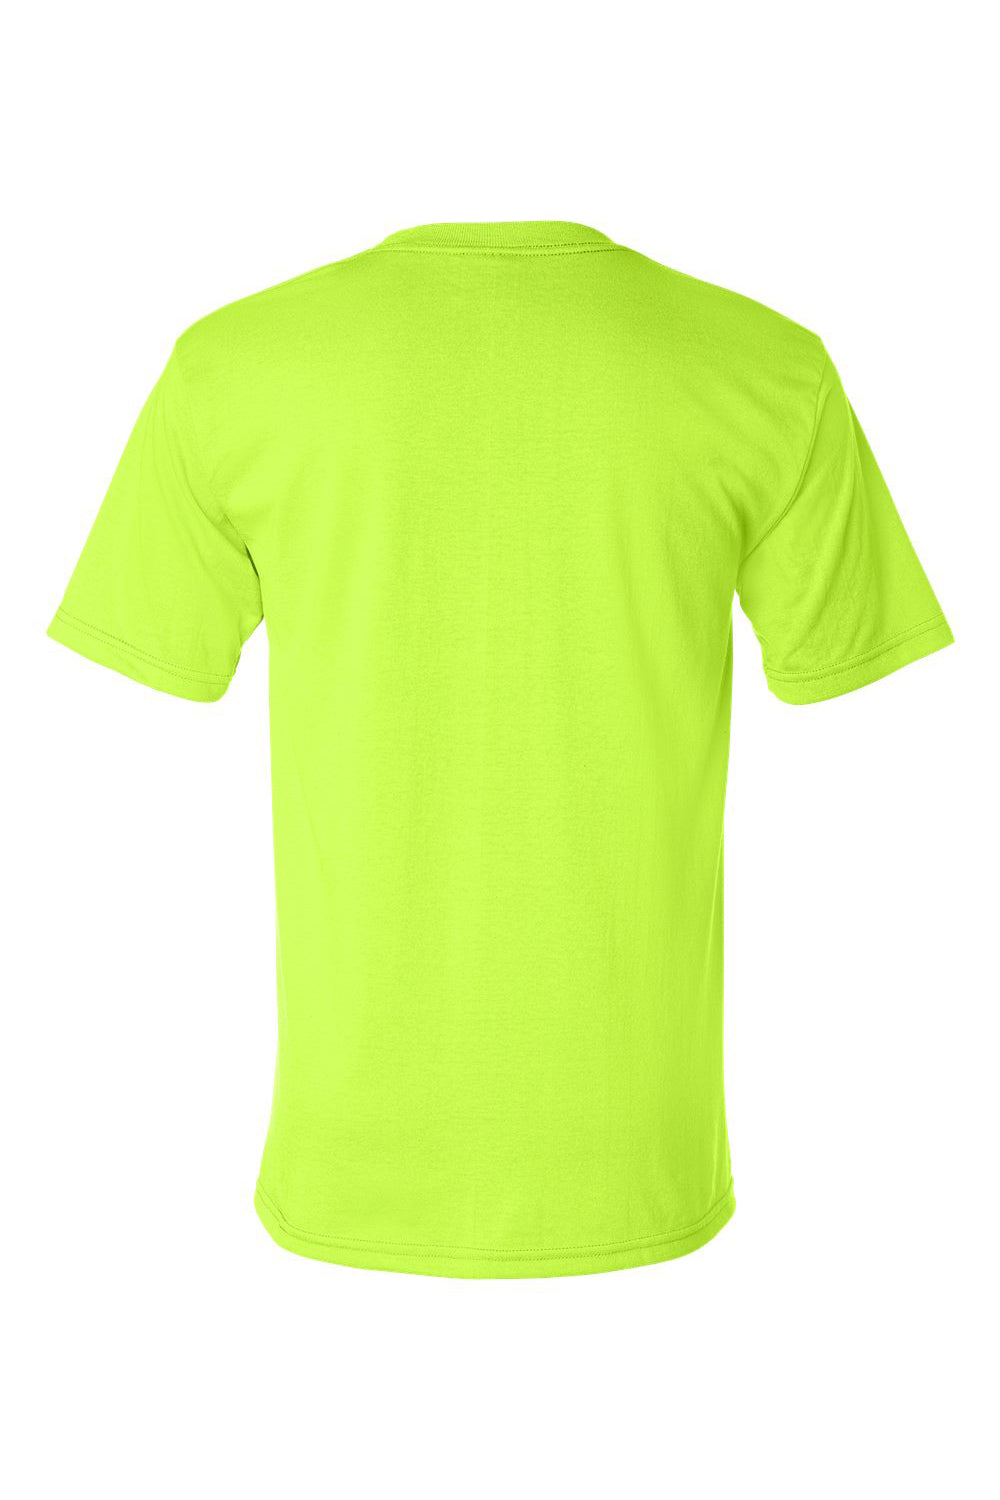 Bayside 1725 Mens USA Made Short Sleeve Crewneck T-Shirt w/ Pocket Safety Green Flat Back